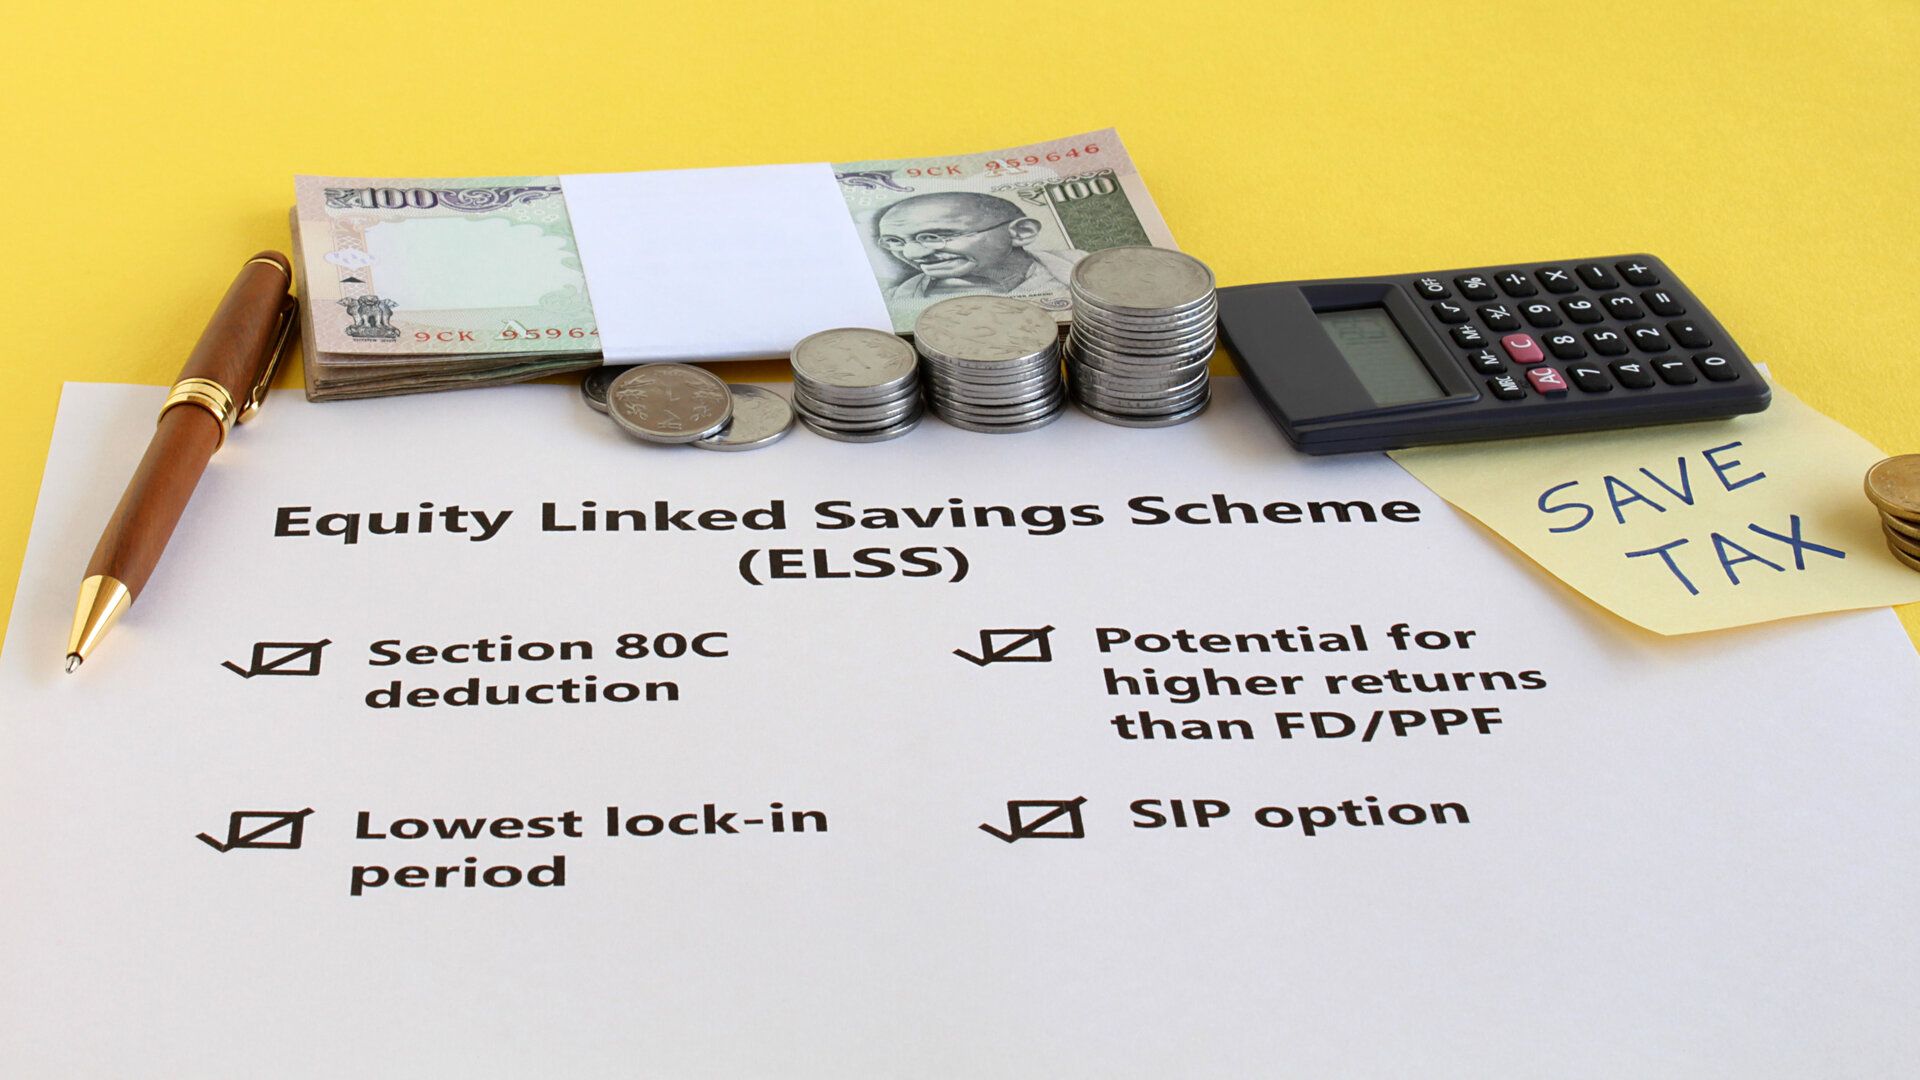 What is Equity-Linked Savings Scheme (ELSS)?